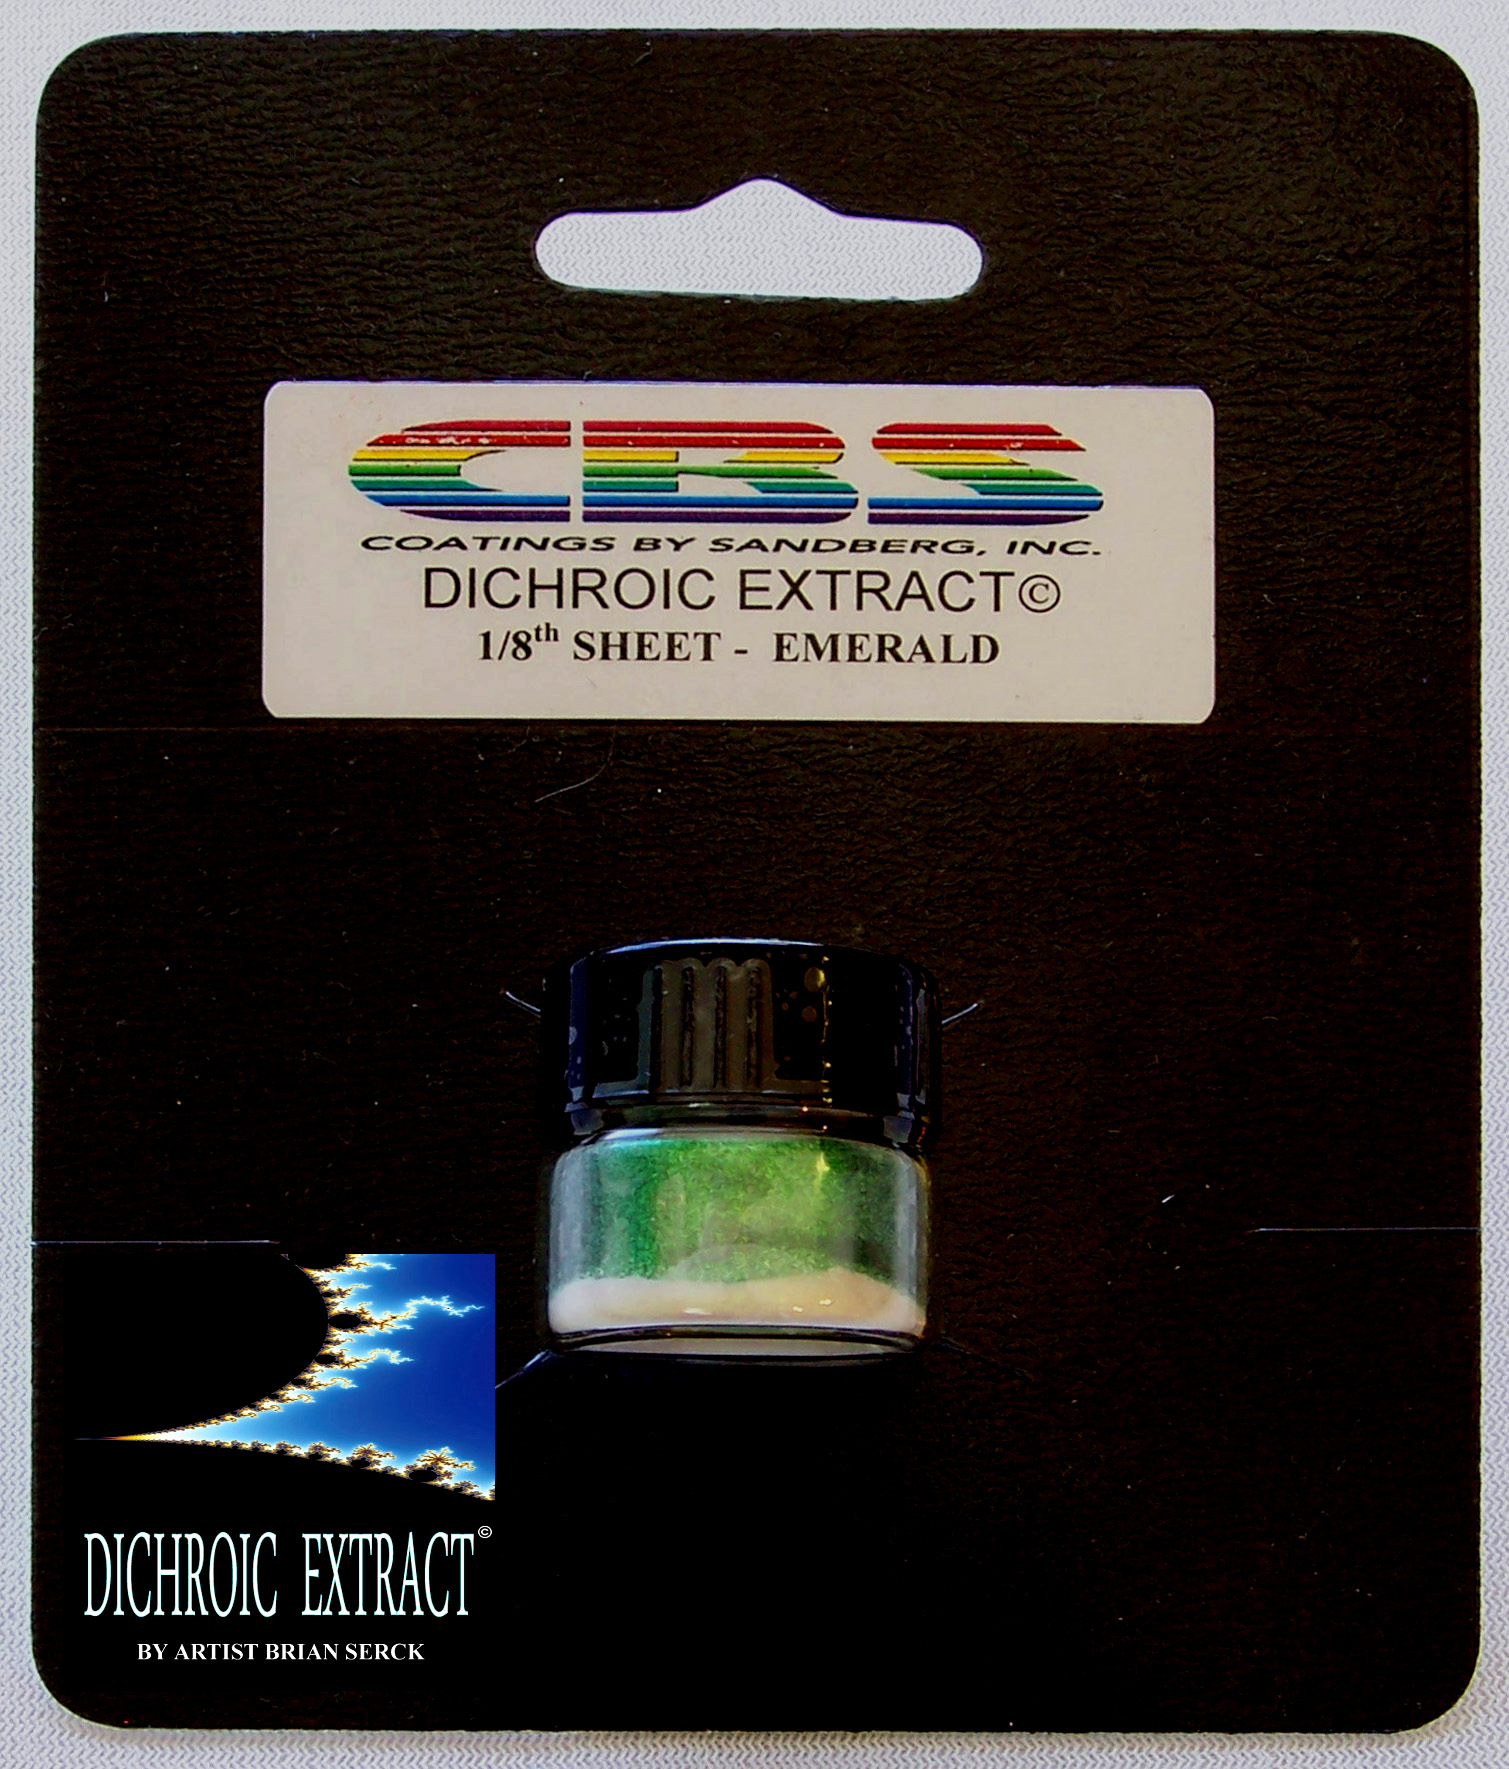 CBS Dichroic Extract Emerald 1/8 Sheet